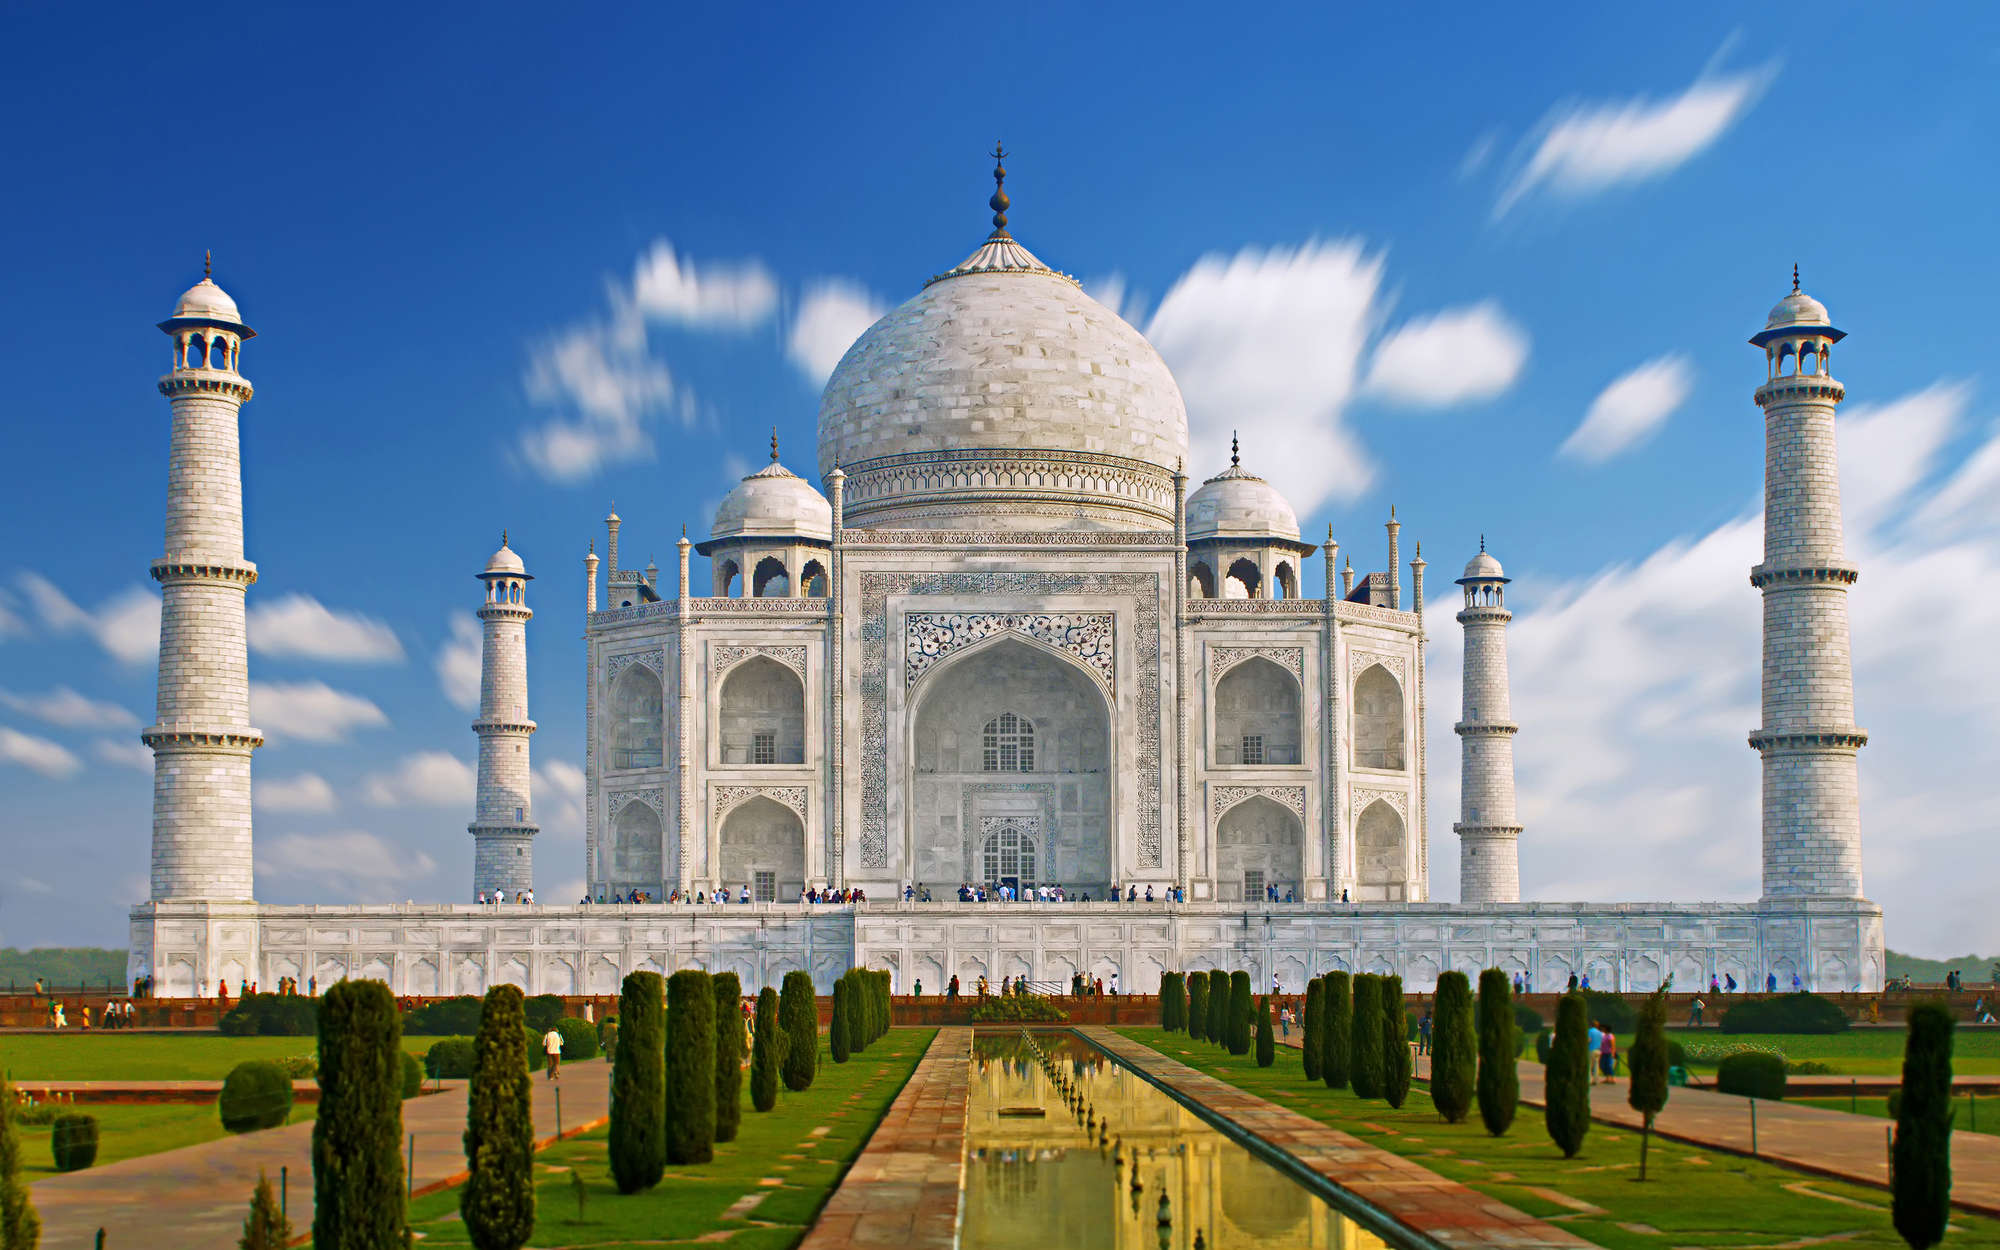             Fototapete Taj Mahal in der Türkei – Strukturiertes Vlies
        